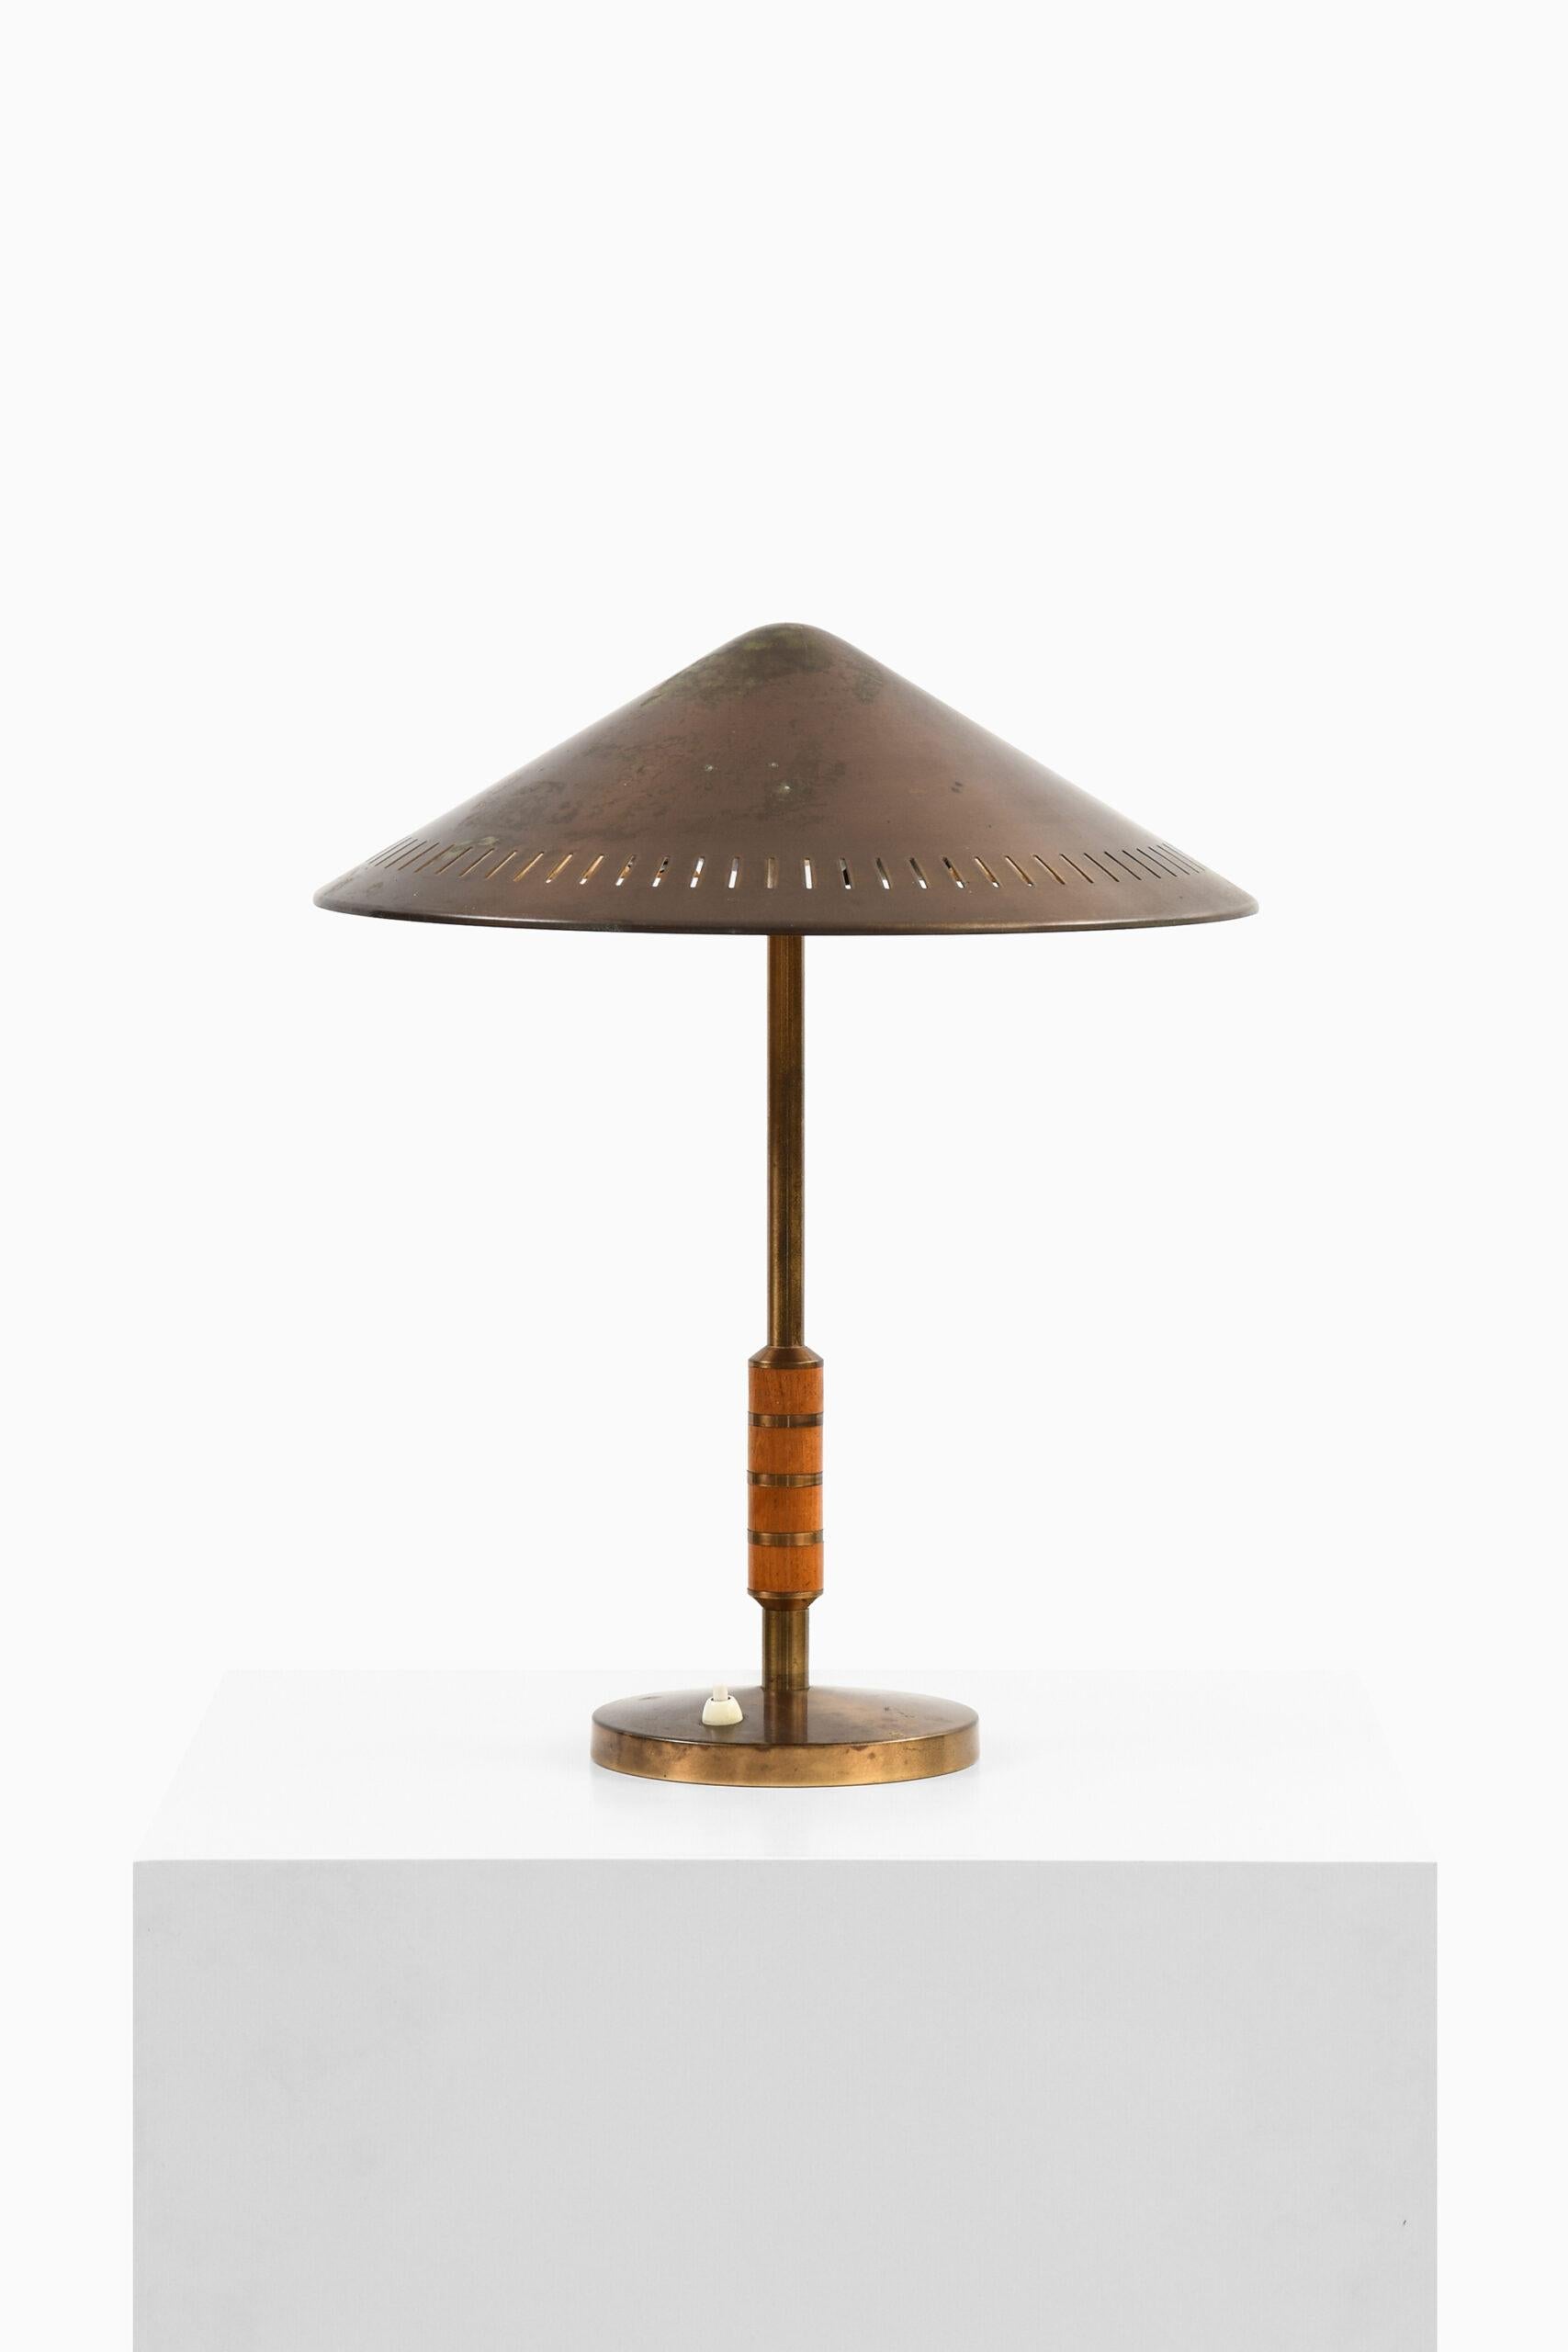 Scandinavian Modern Bent Karlby Table Lamp Produced by Lyfa in Denmark